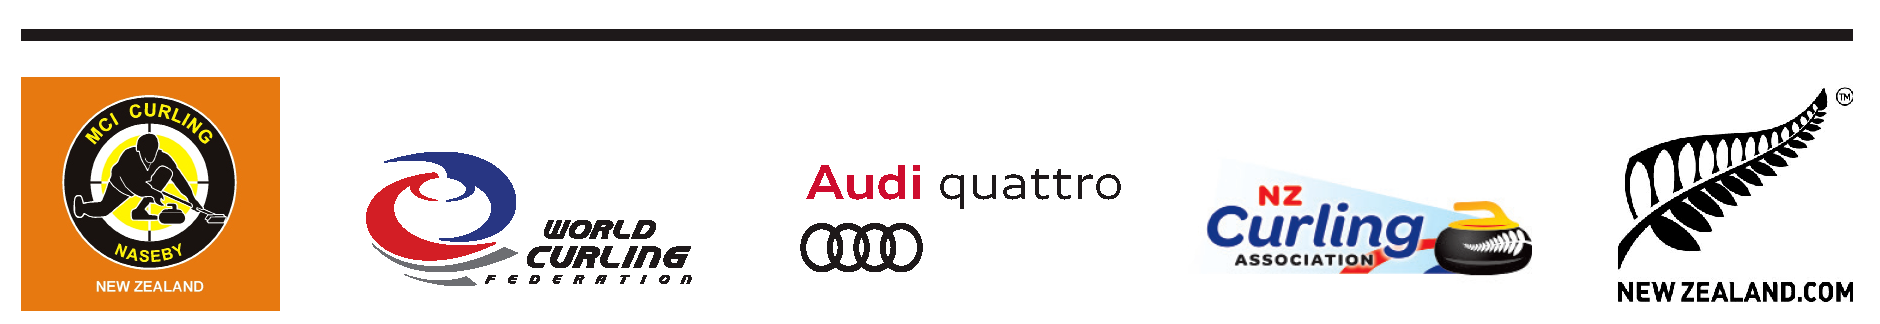 Audi quattro Winter Games NZ 2017